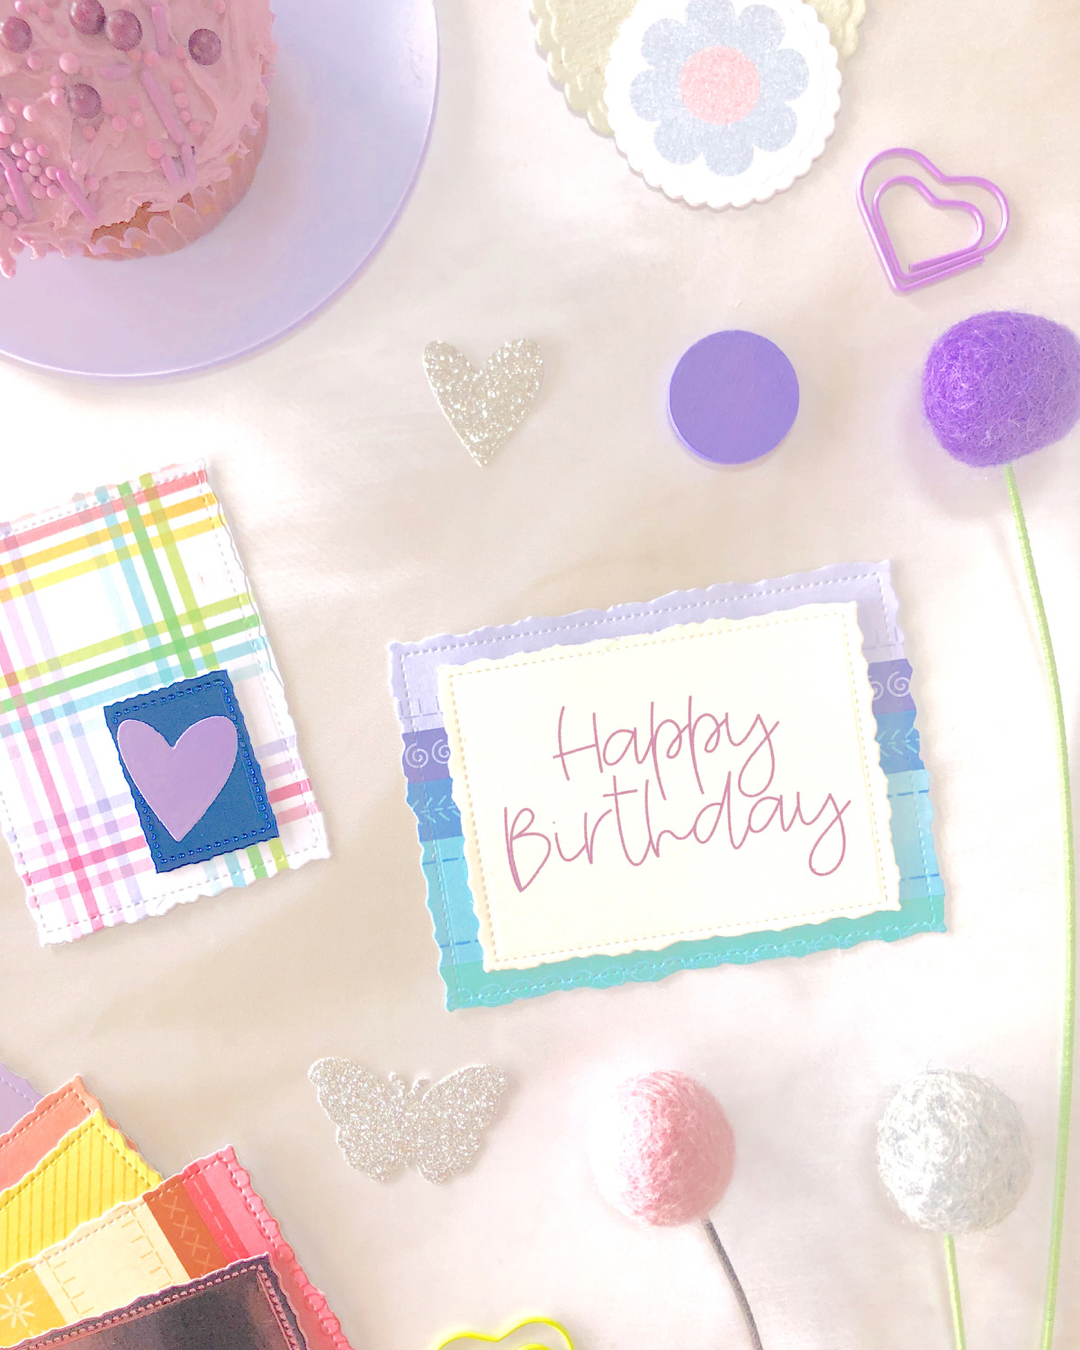 The Birthday Card Craft Kit